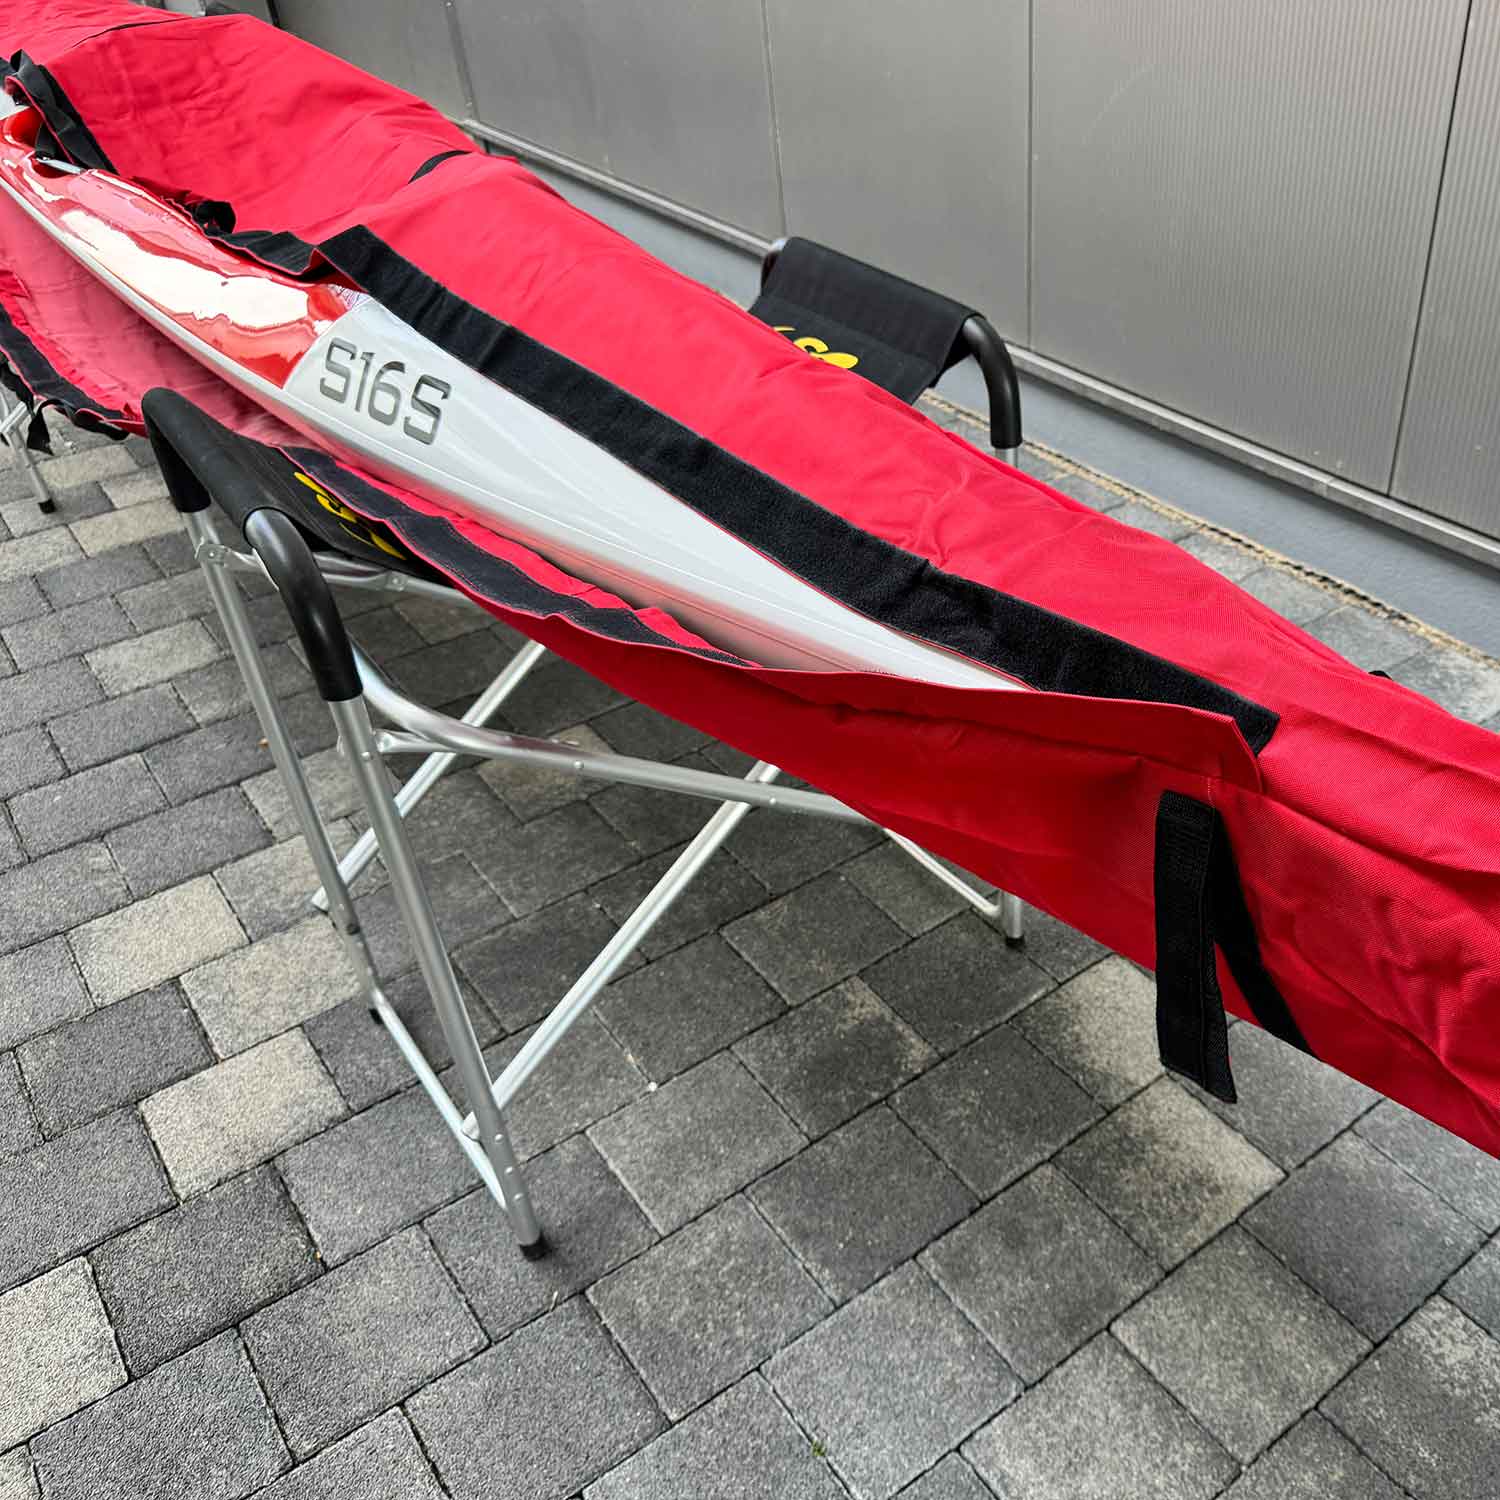 Transport cover for kayak and surf ski